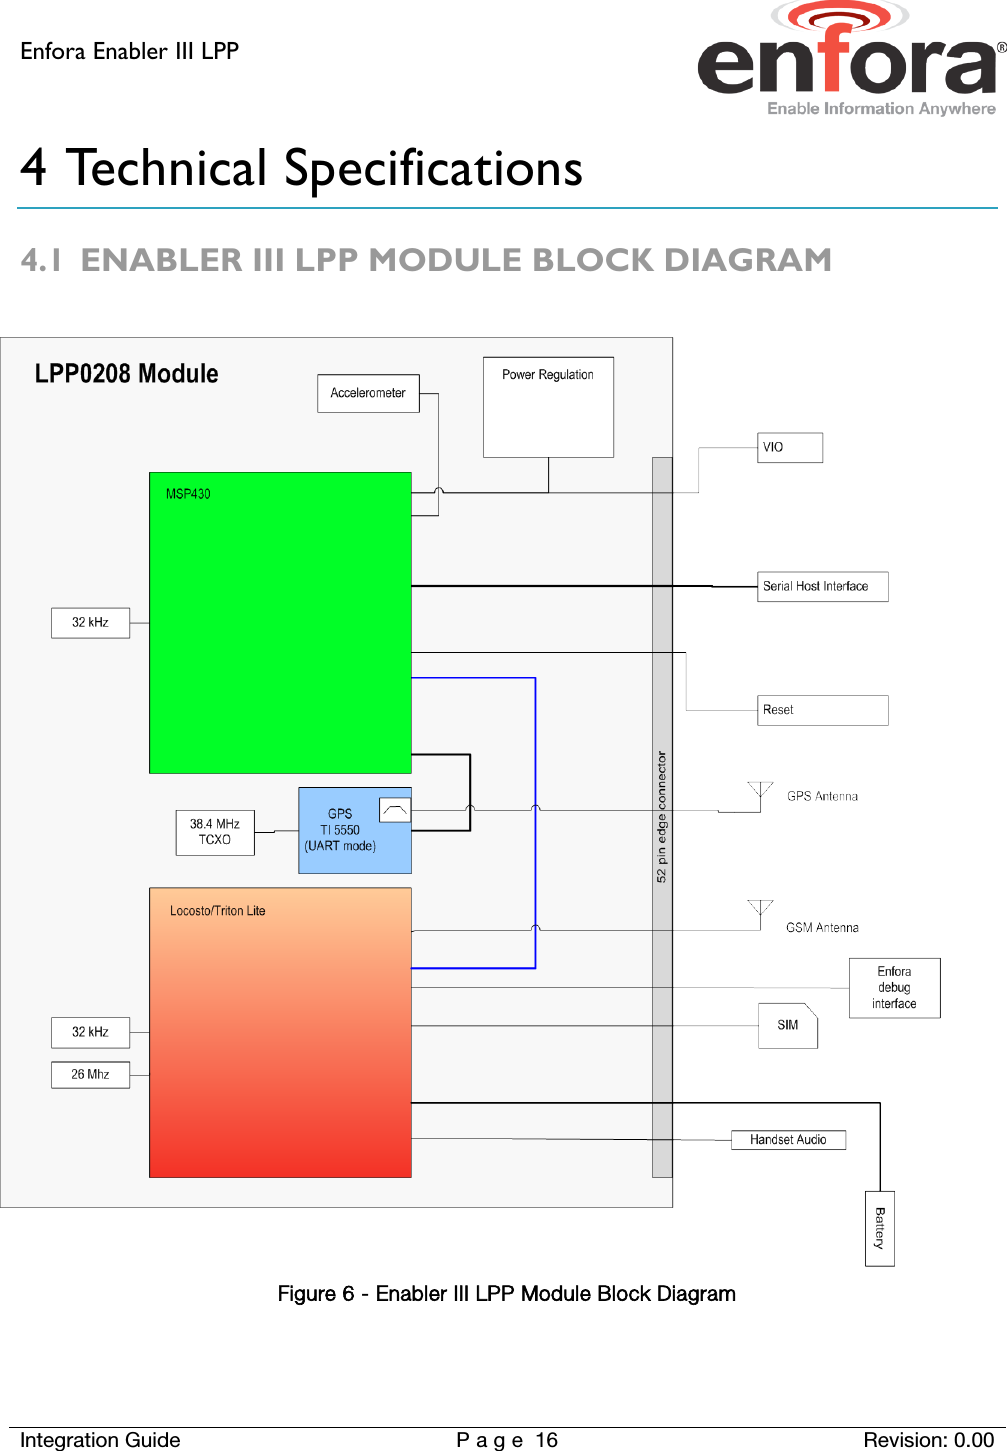 Enfora Enabler III LPP    Integration Guide Page 16 Revision: 0.00  4 Technical Specifications 4.1 ENABLER III LPP MODULE BLOCK DIAGRAM   Figure 6 - Enabler III LPP Module Block Diagram   